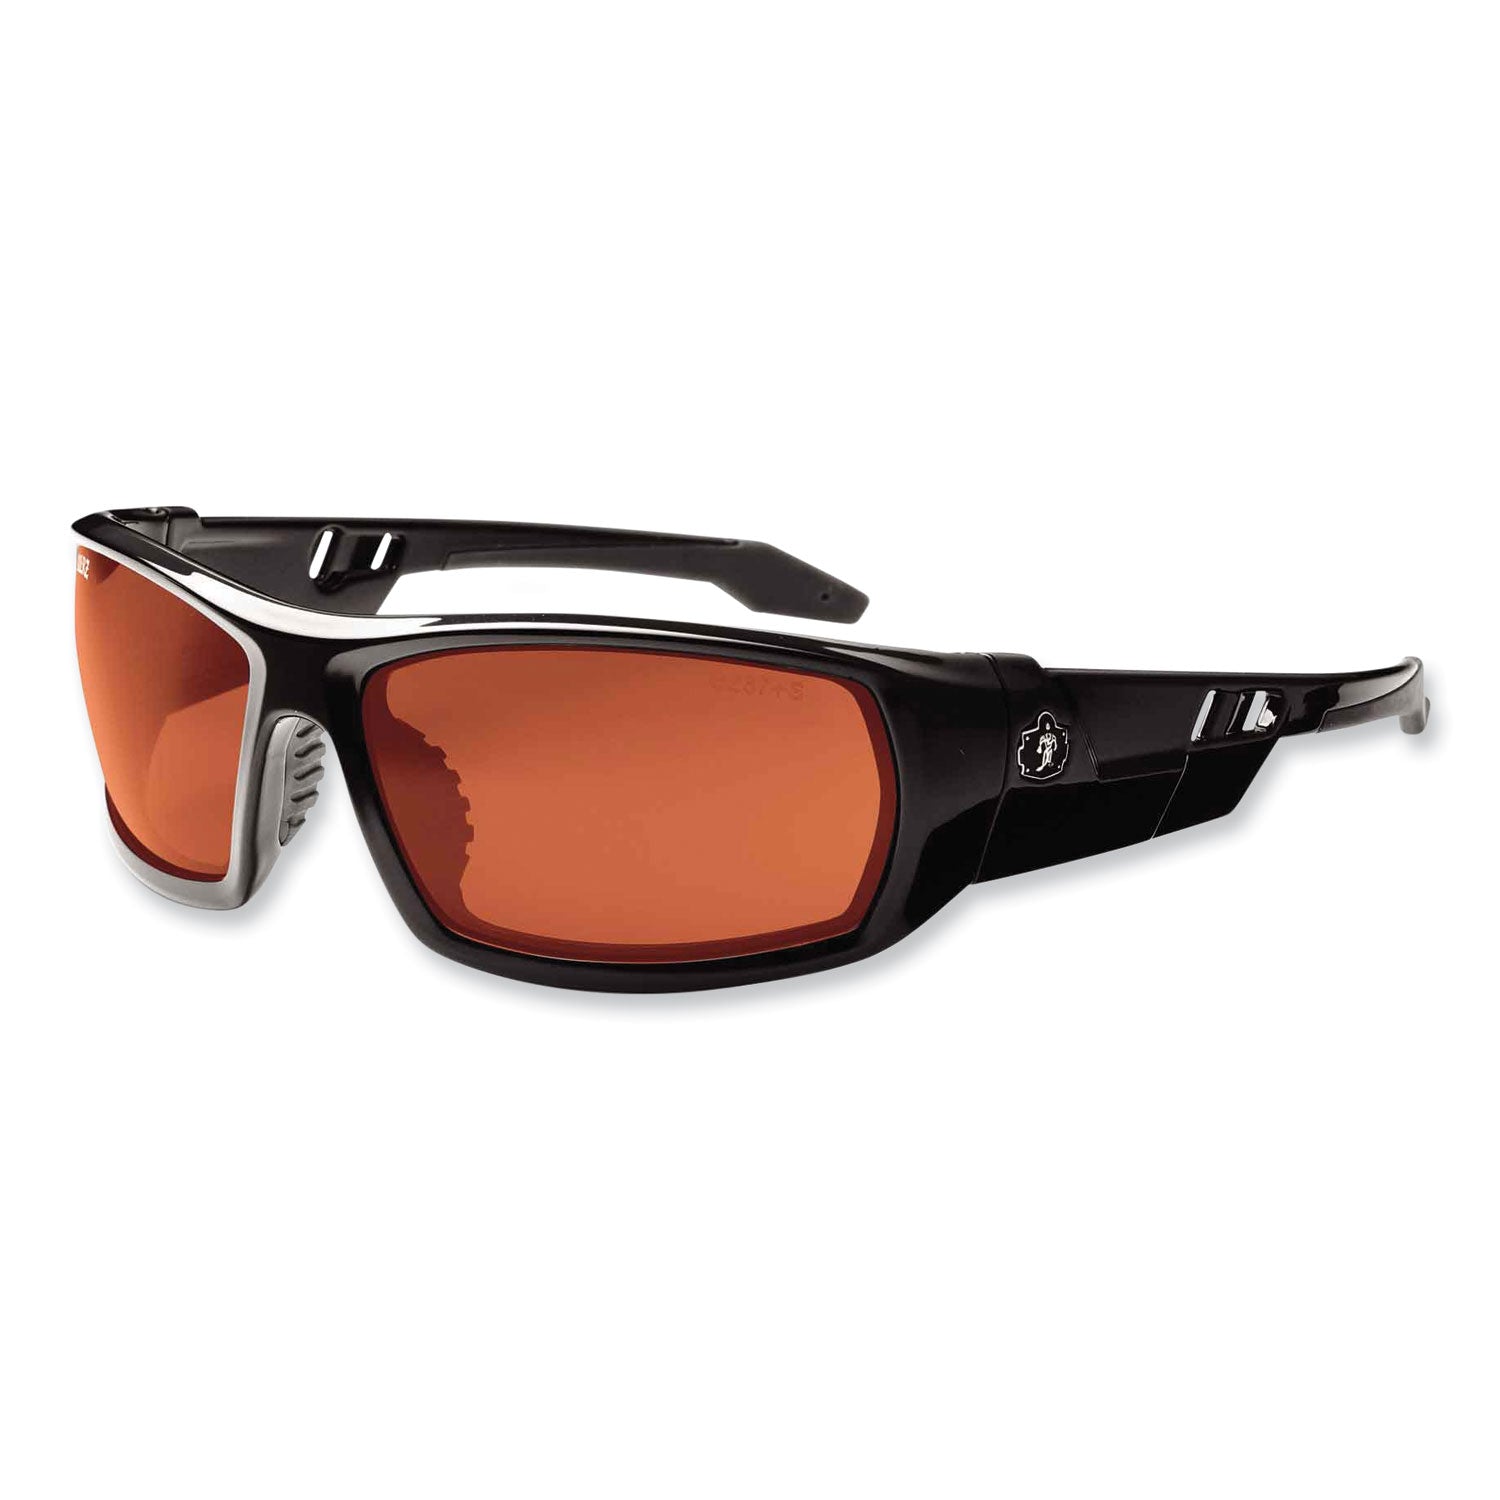 skullerz-odin-safety-glasses-black-nylon-impact-frame-copper-polycarbonate-lens-ships-in-1-3-business-days_ego50020 - 1